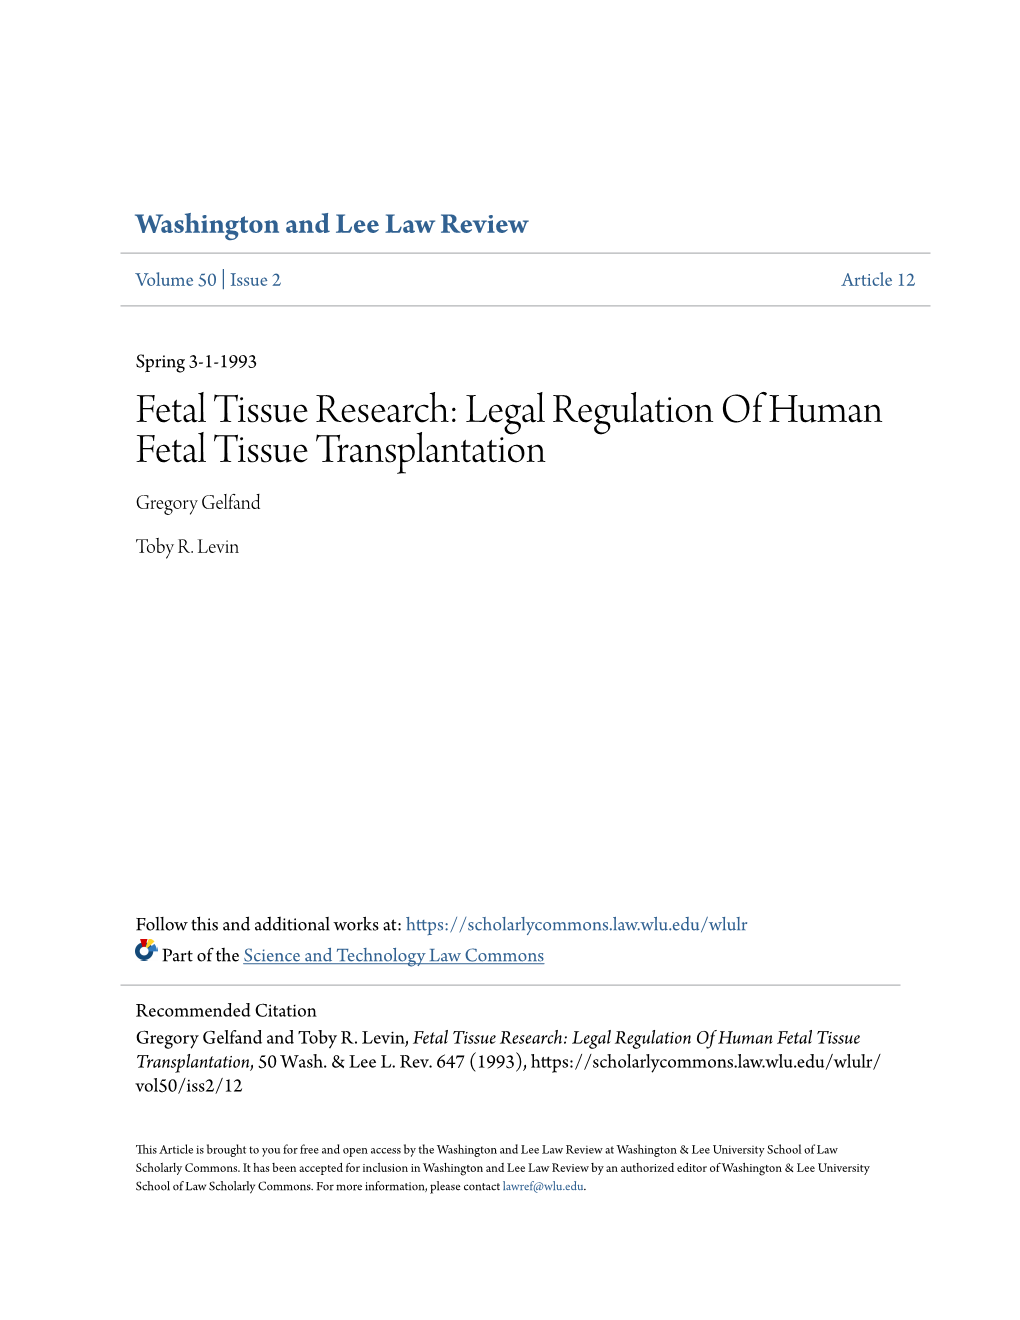 Legal Regulation of Human Fetal Tissue Transplantation Gregory Gelfand